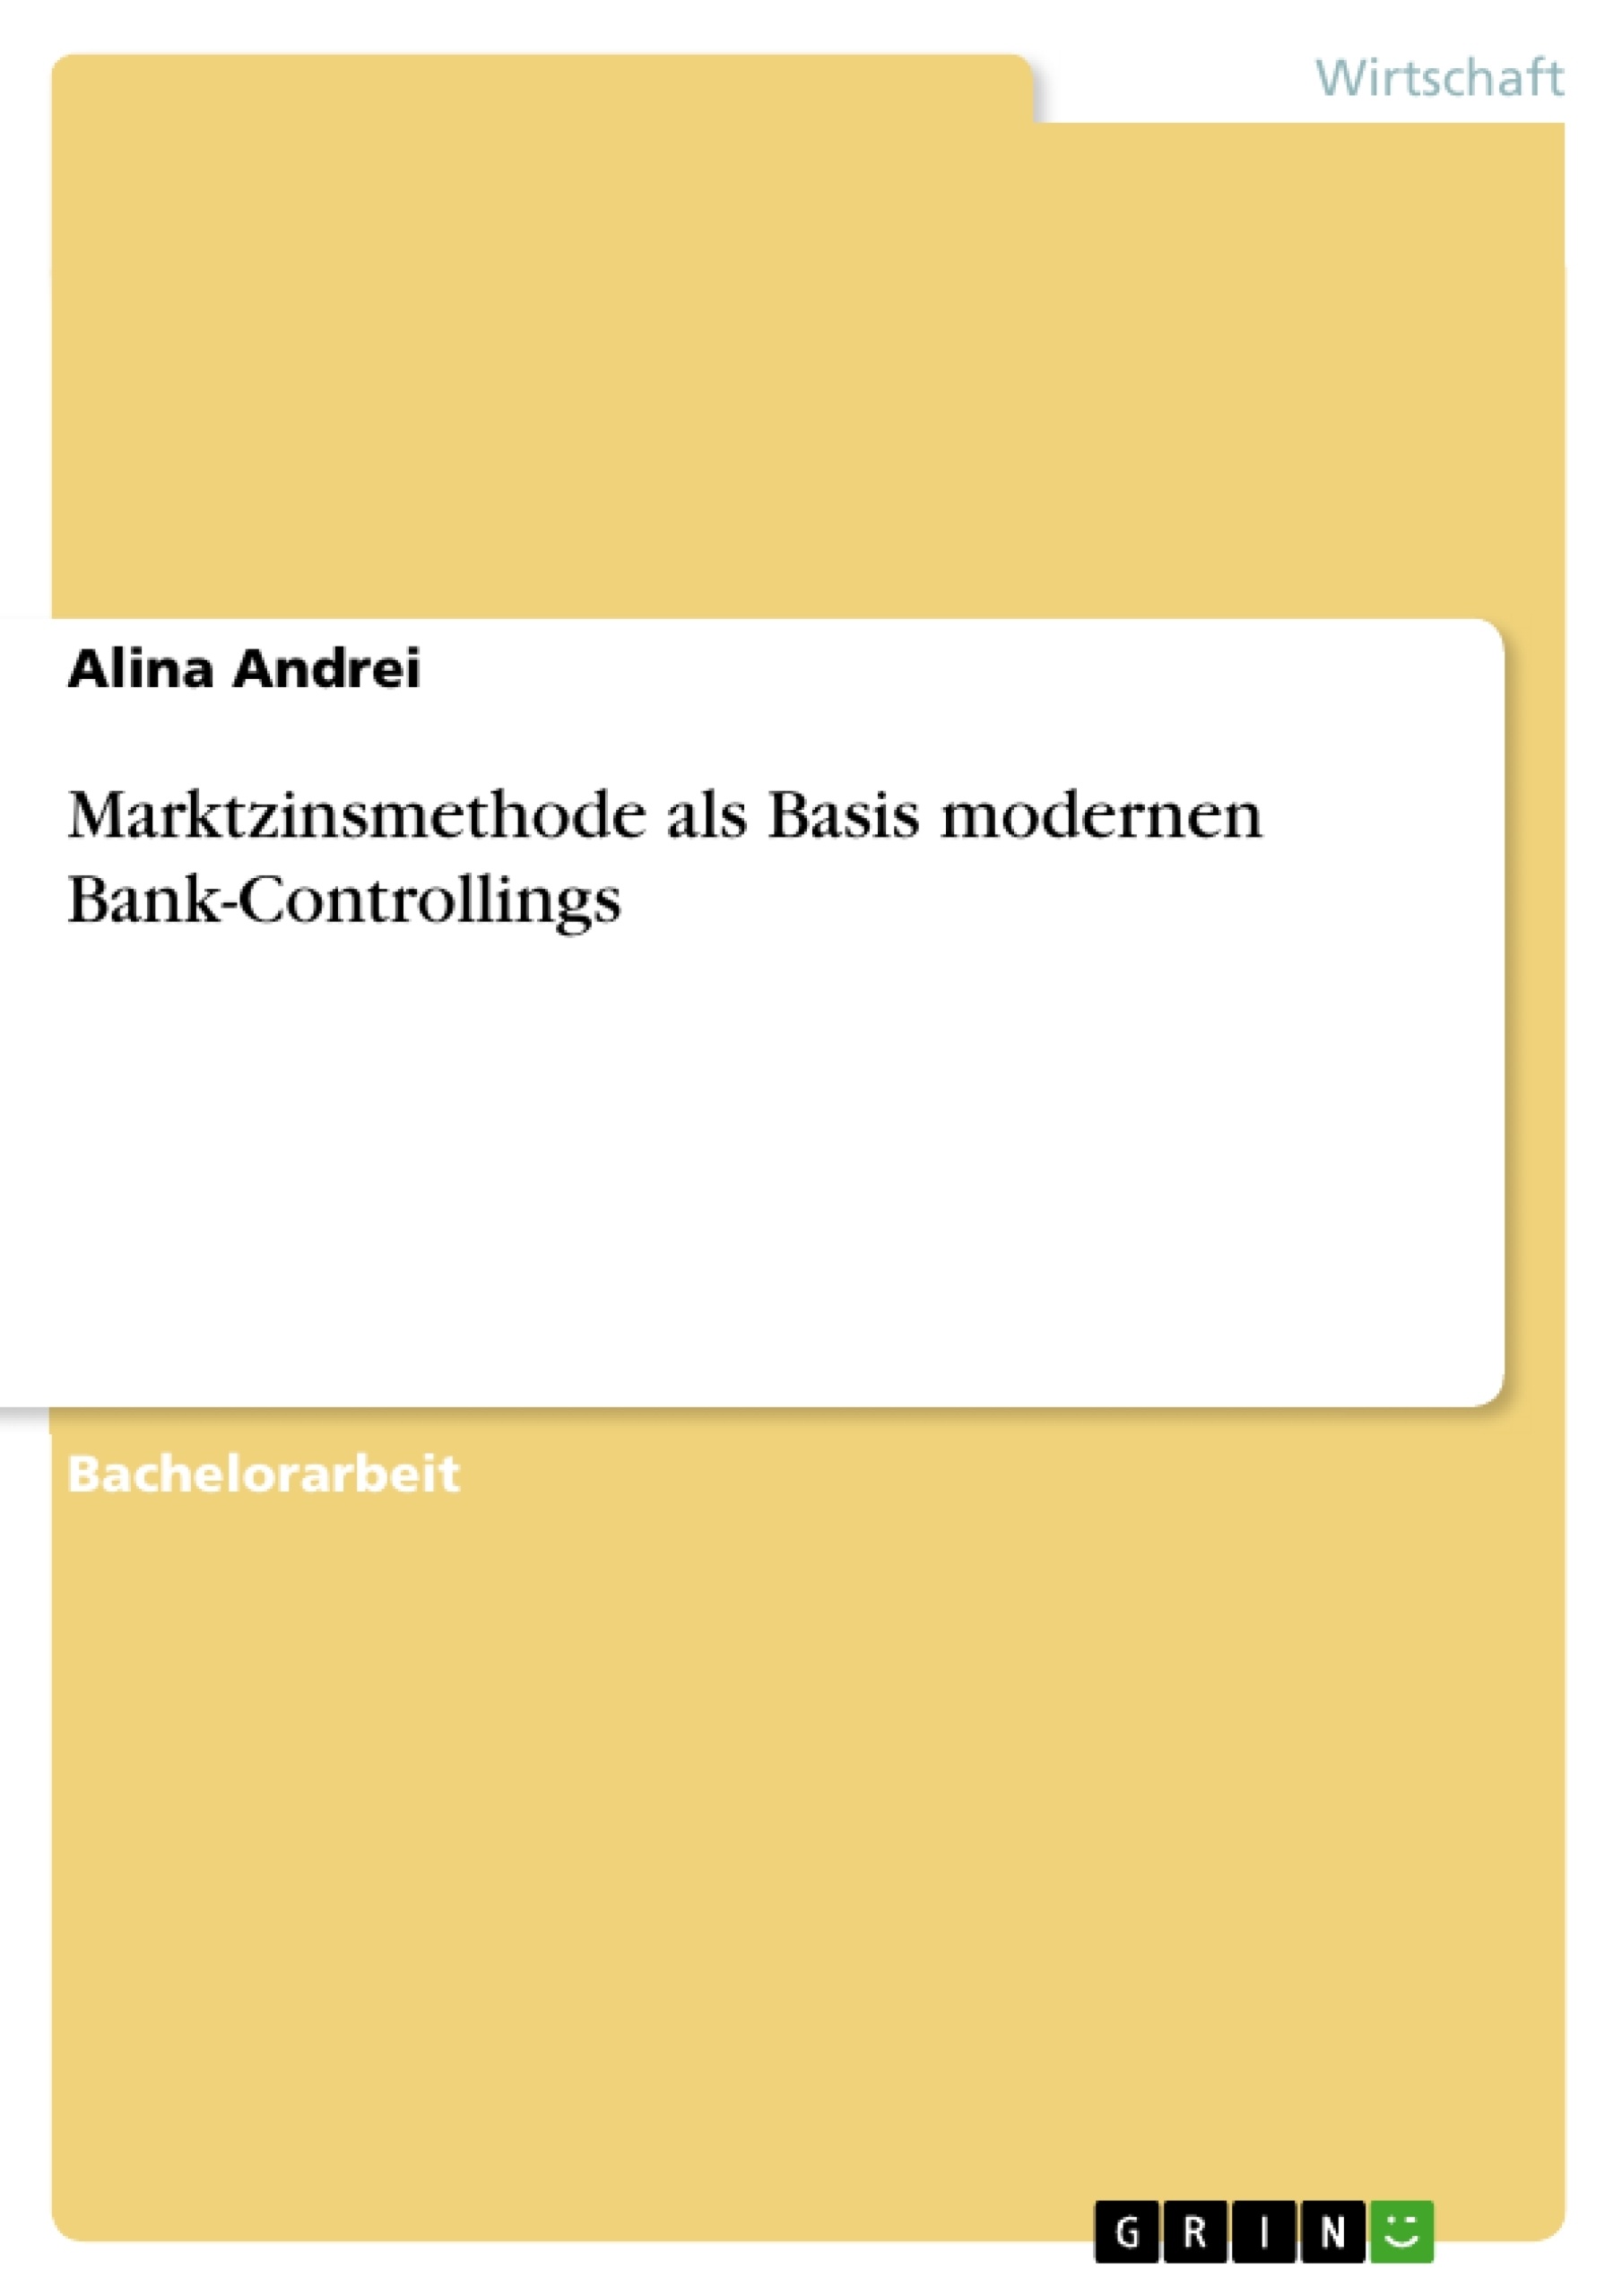 Title: Marktzinsmethode als Basis modernen Bank-Controllings